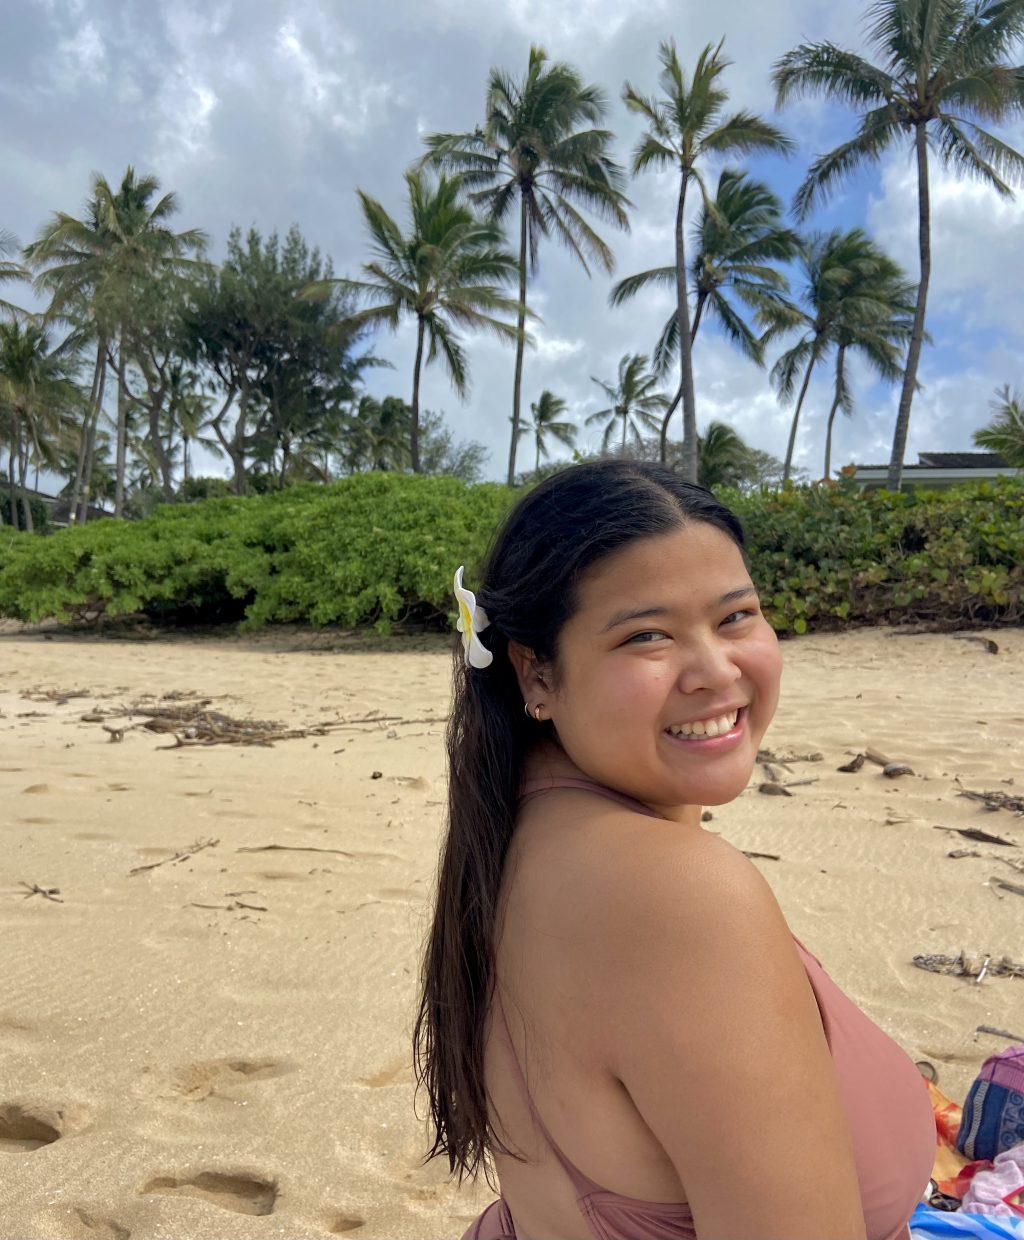 Kiaaina poses on Hale'iwa Beach in O'ahu on March 1. She said her favorite place on the island is the North Shore. Photo courtesy of Kala'i Kiaaina